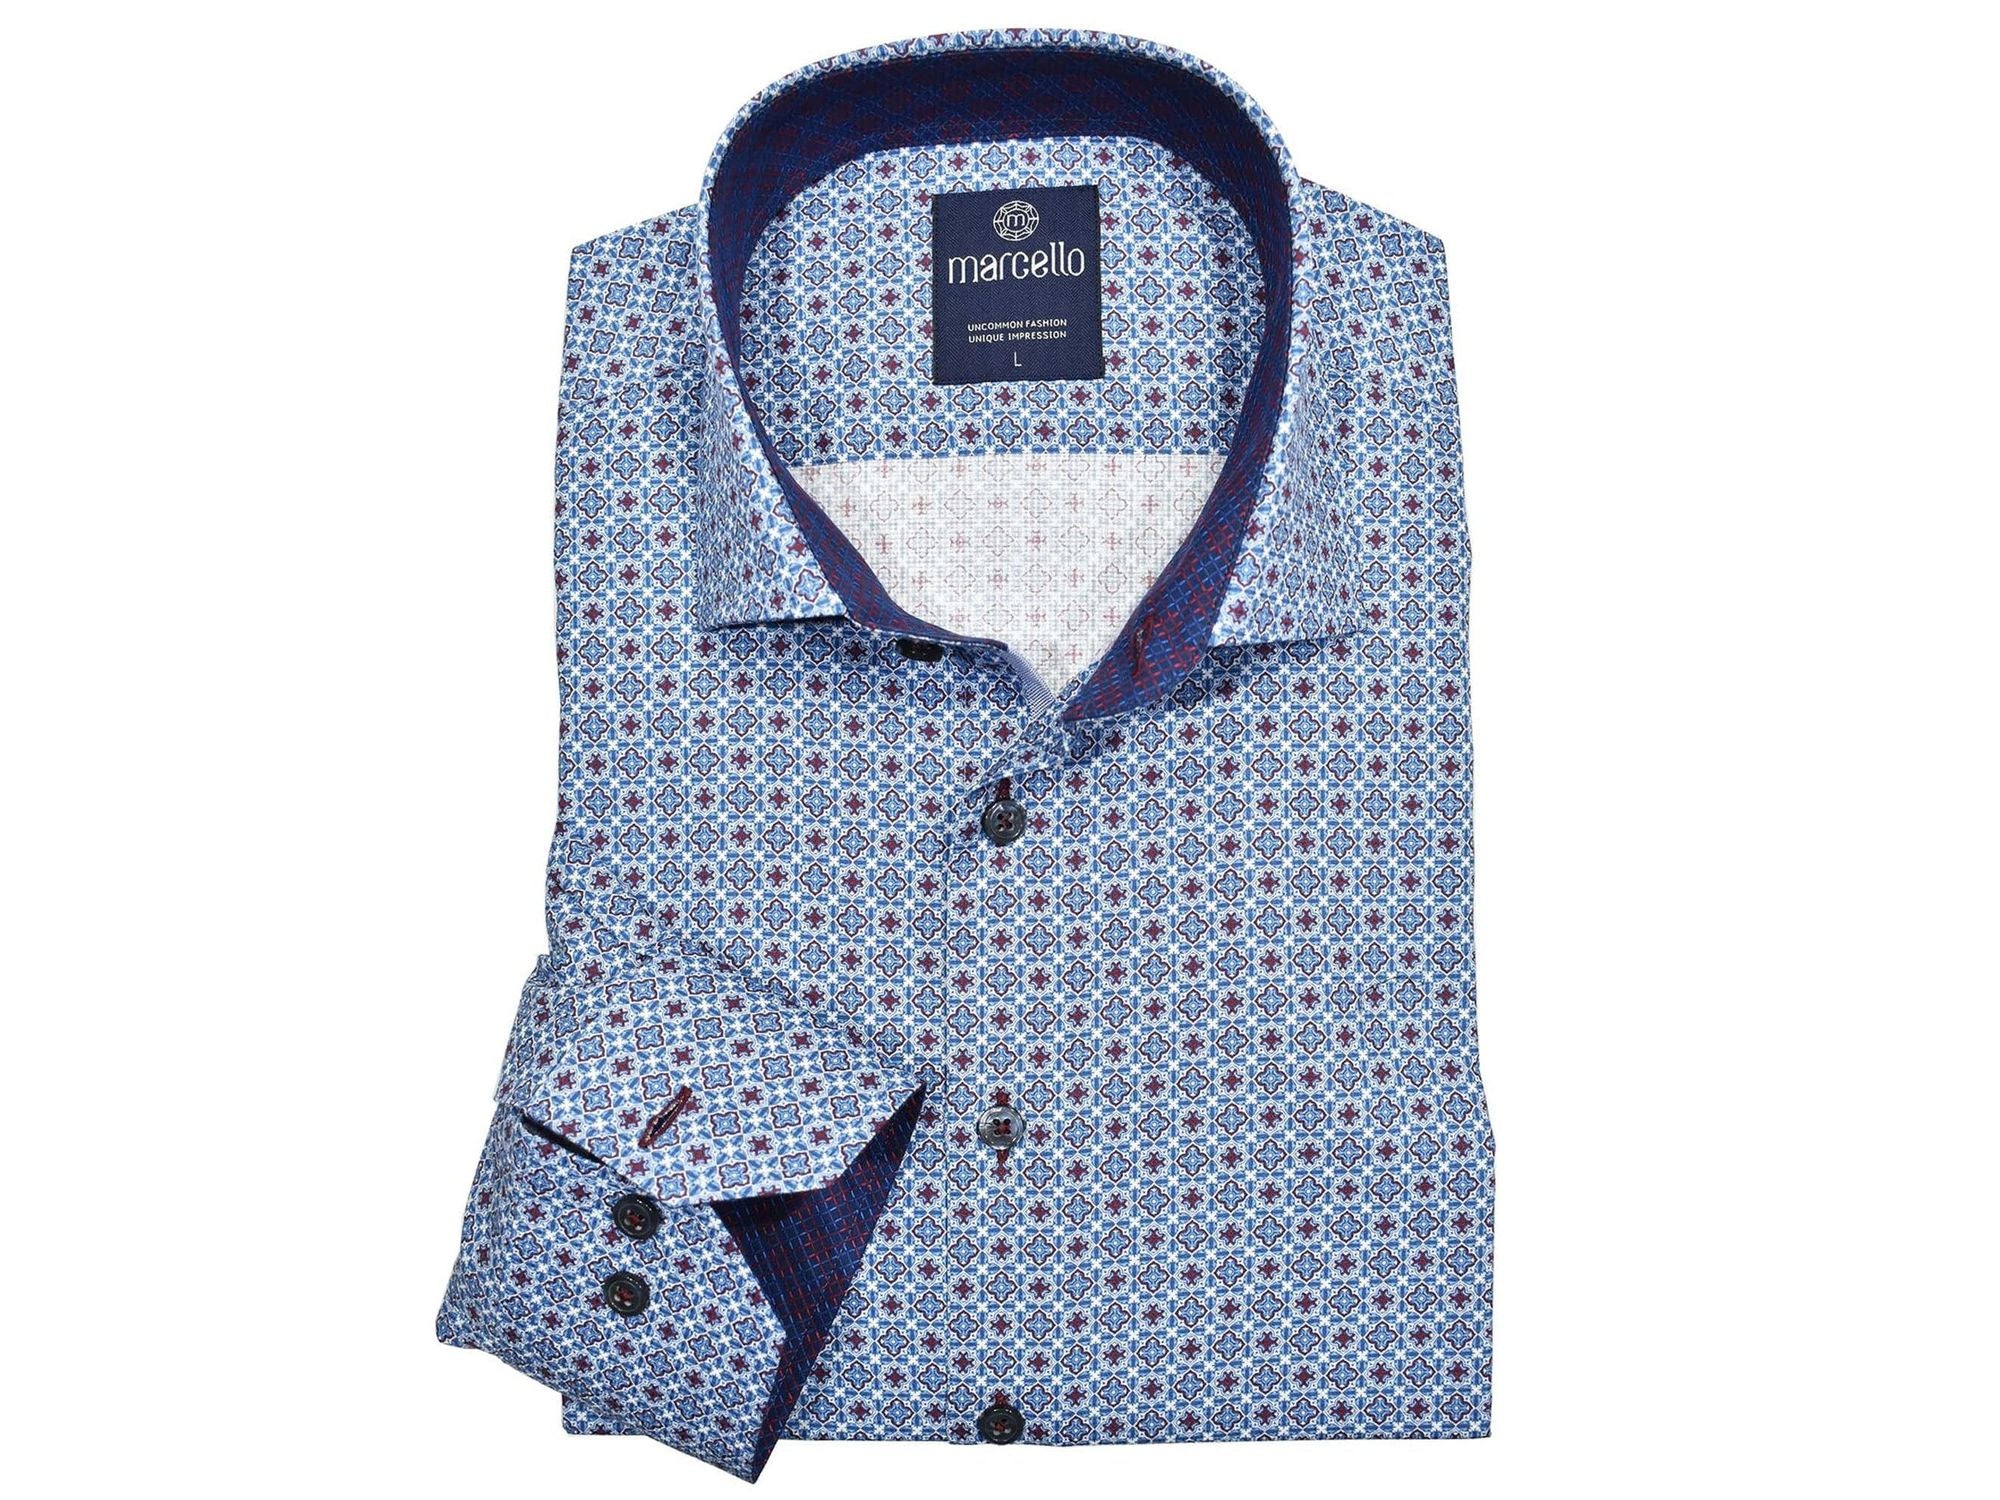 Marcello Sky Blue With Burgundy Medallion Shirt - Rainwater's Men's Clothing and Tuxedo Rental